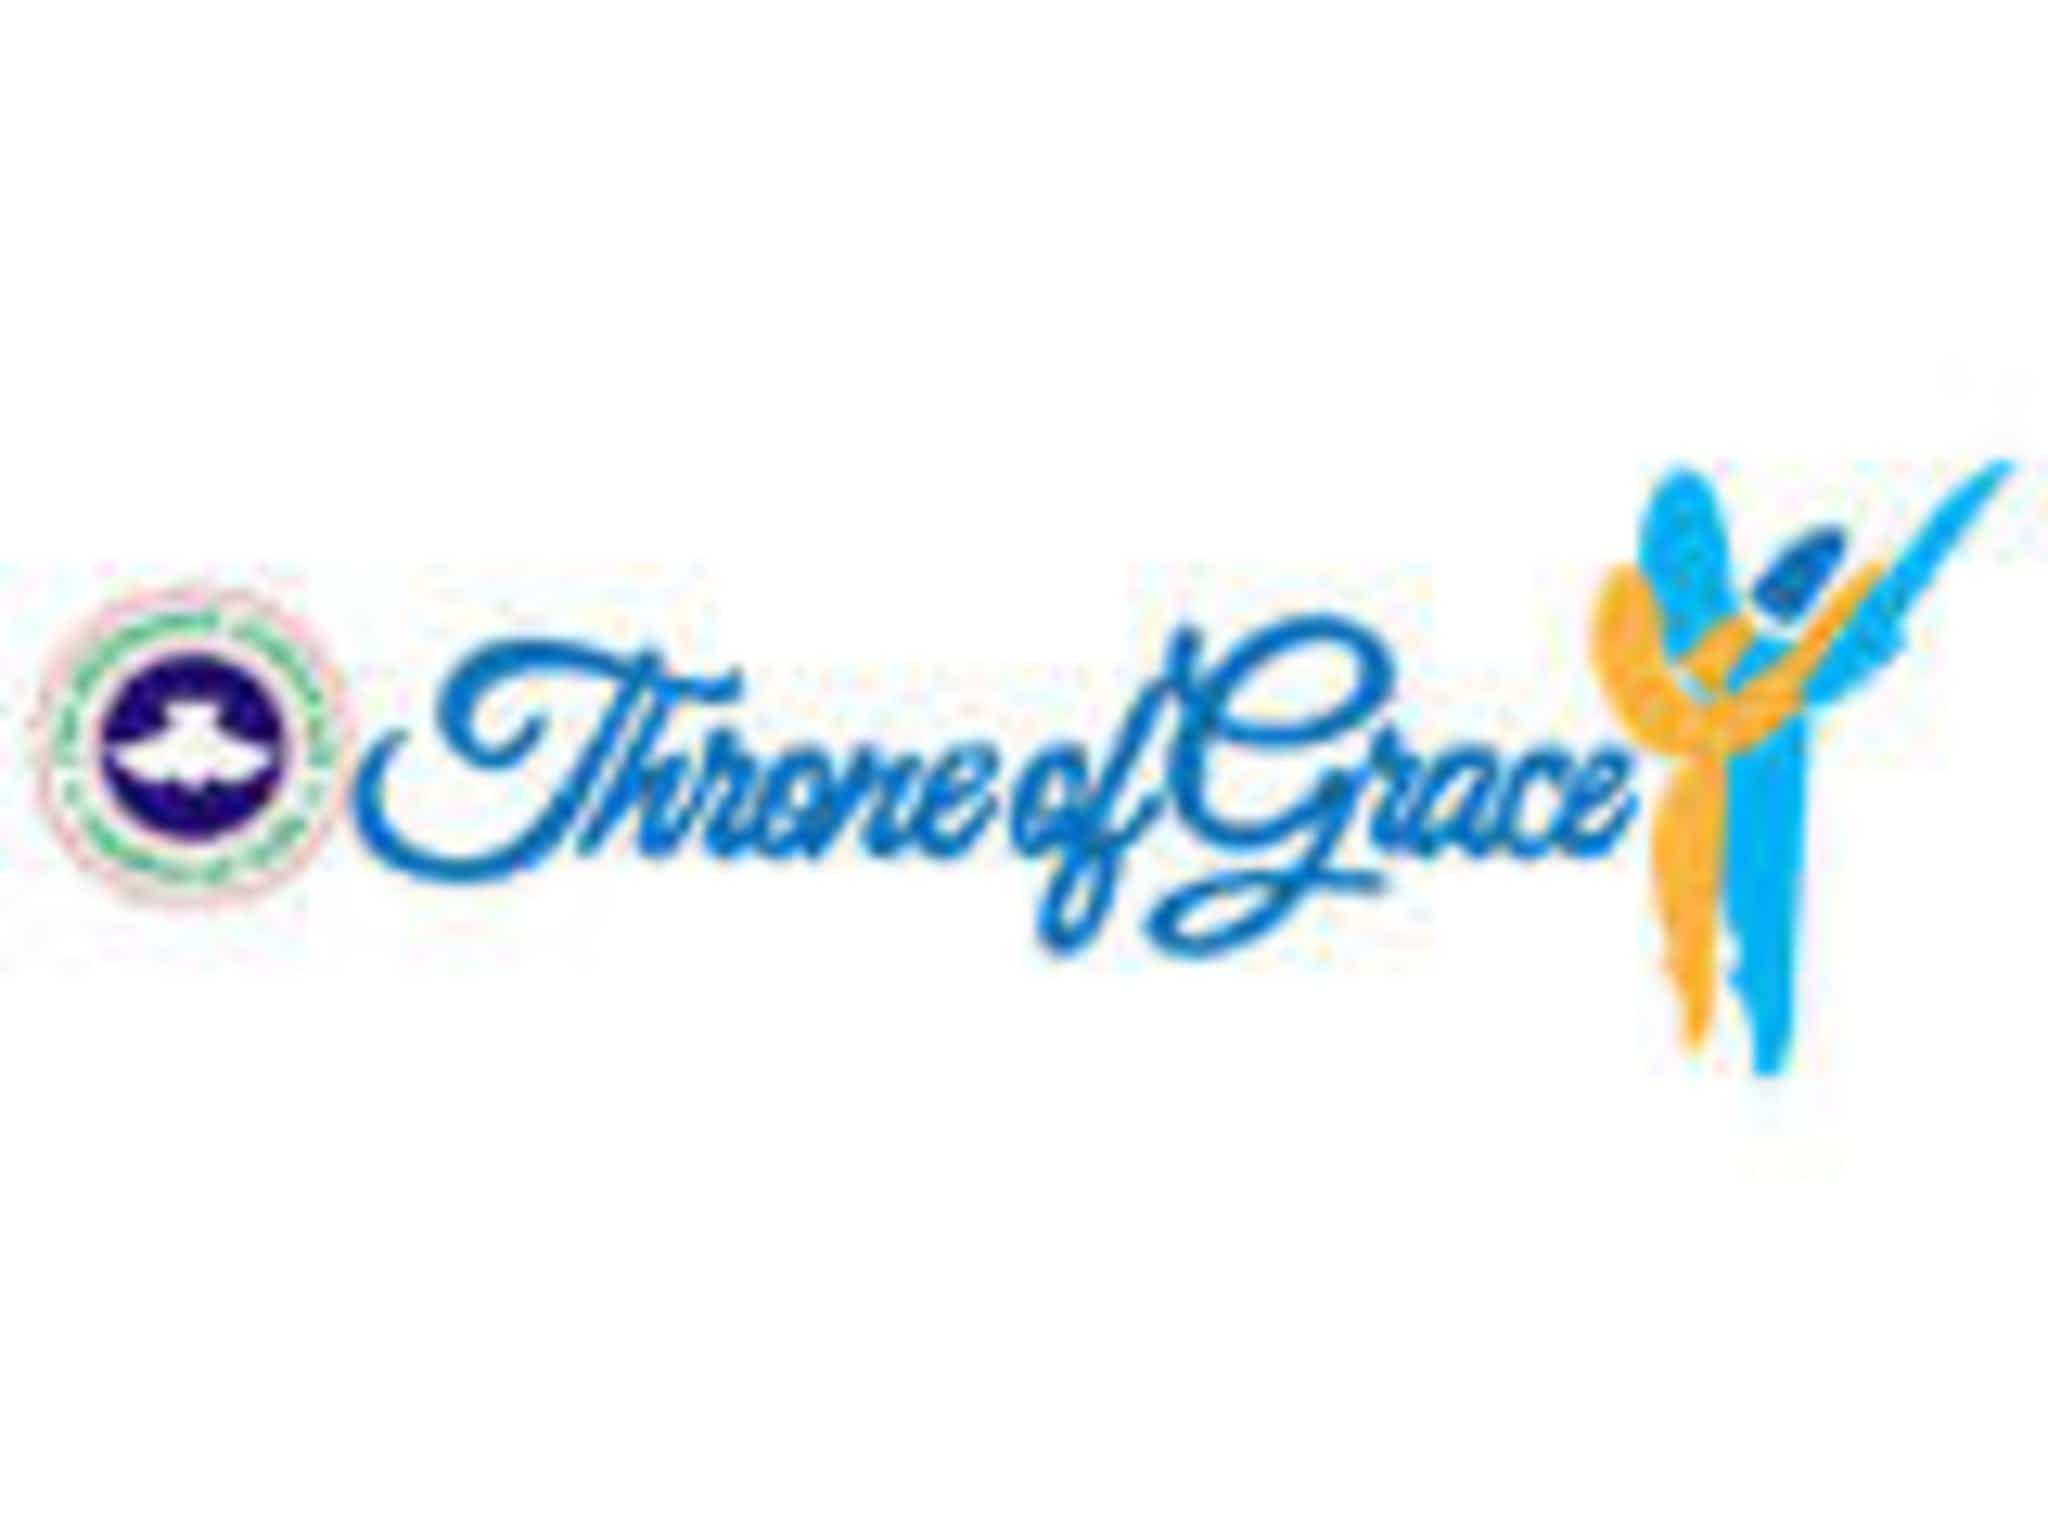 photo RCCG - Throne of Grace